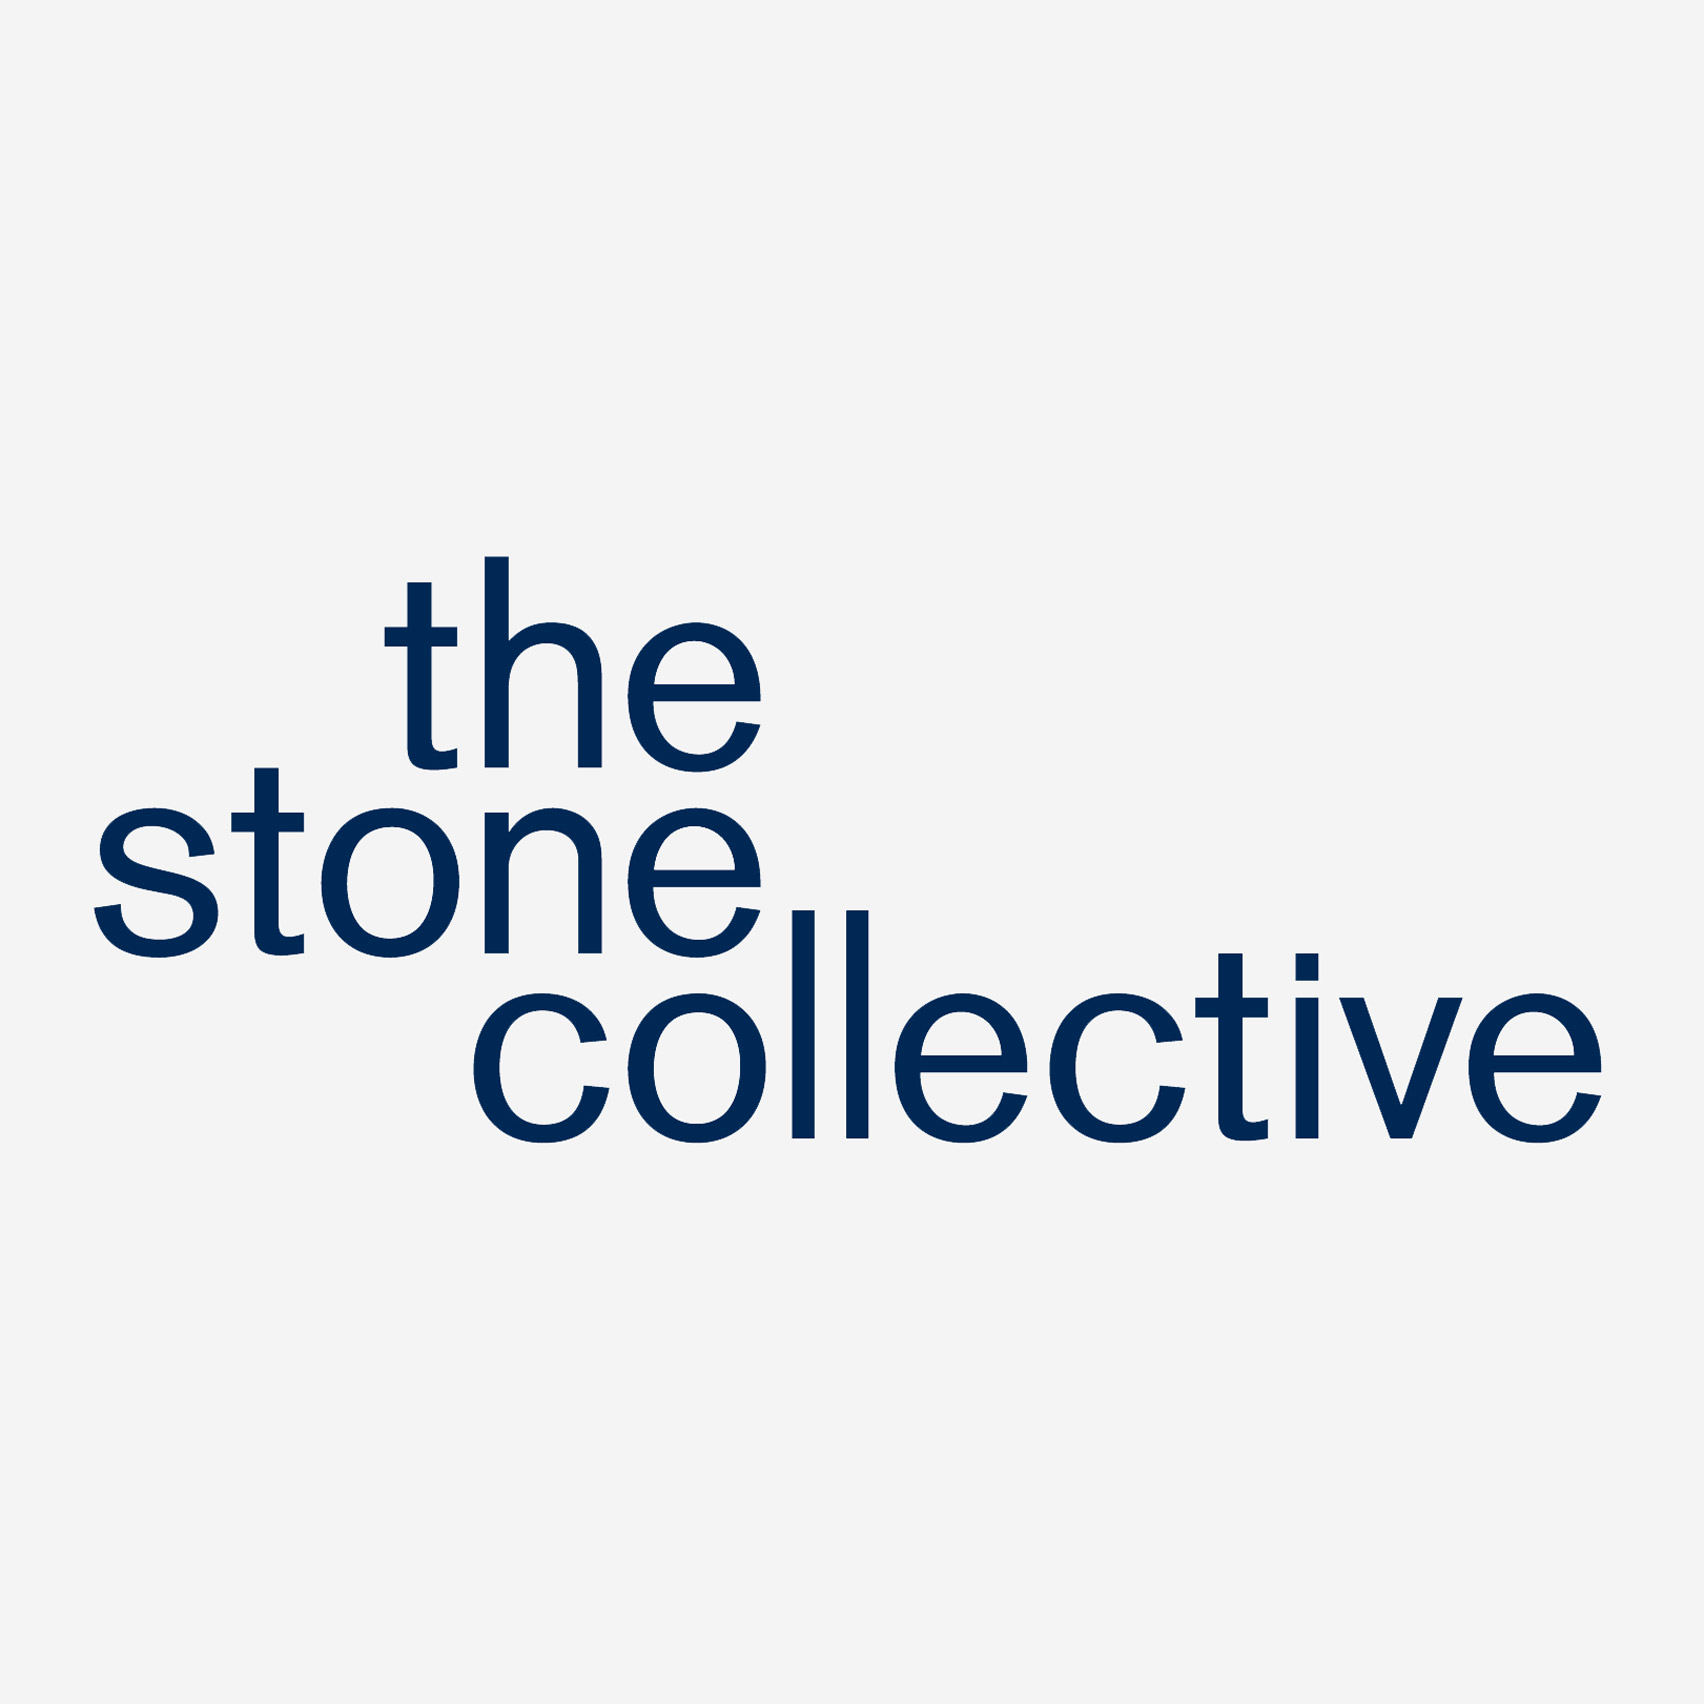 The Stone Collective logo